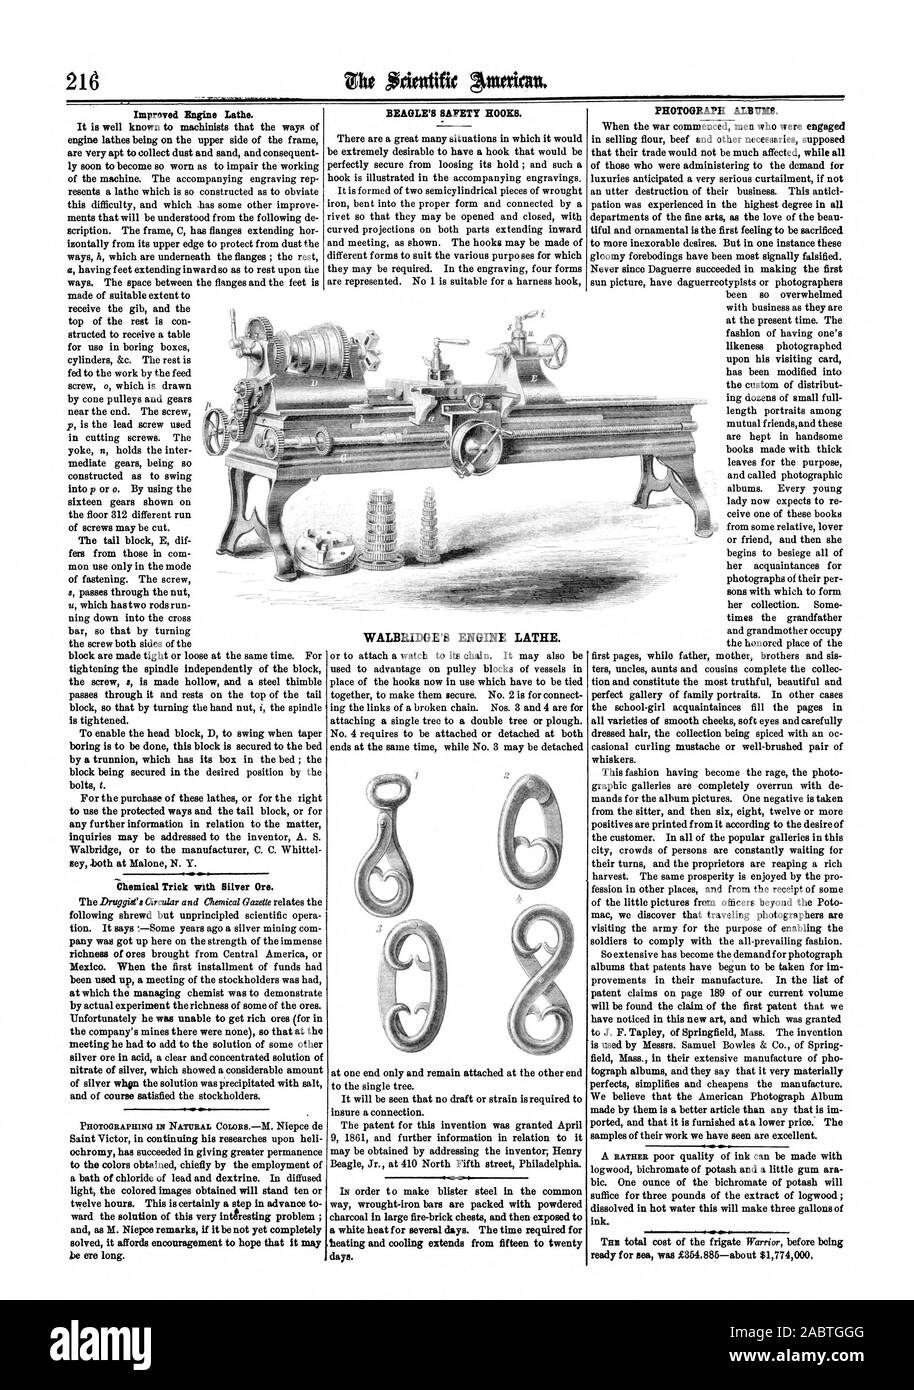 WALBRIDGE'S ENGINE LATHE., scientific american, 1862-04-05 Stock Photo